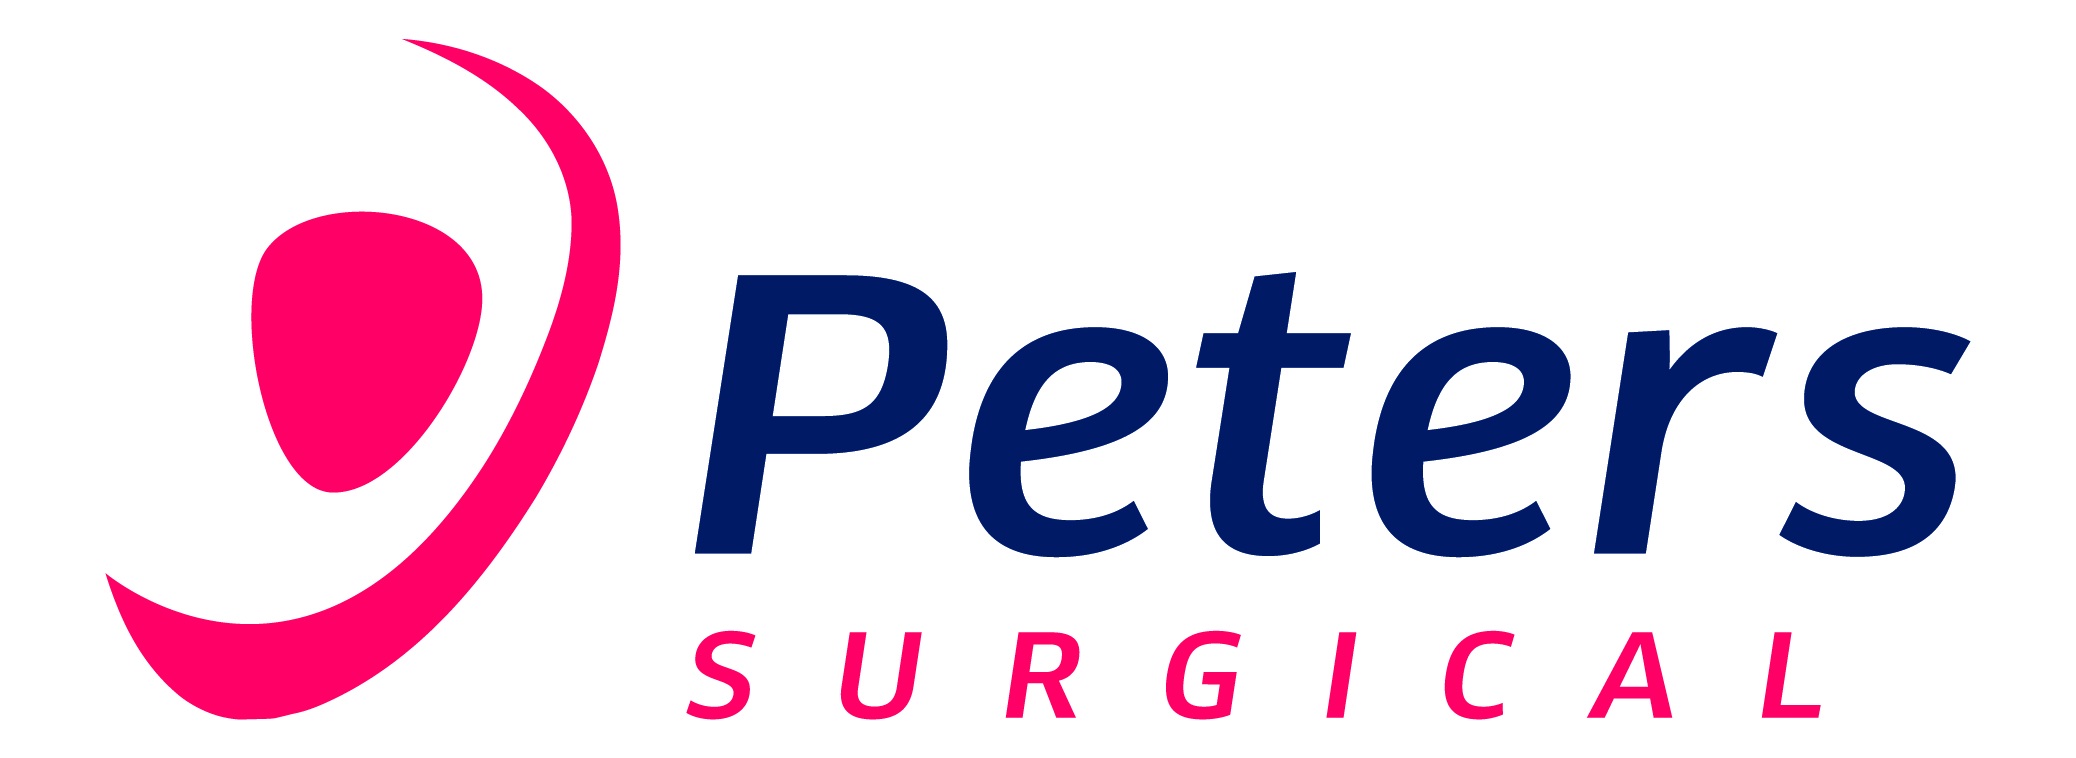 Peters Surgical Polska Sp. z o.o.